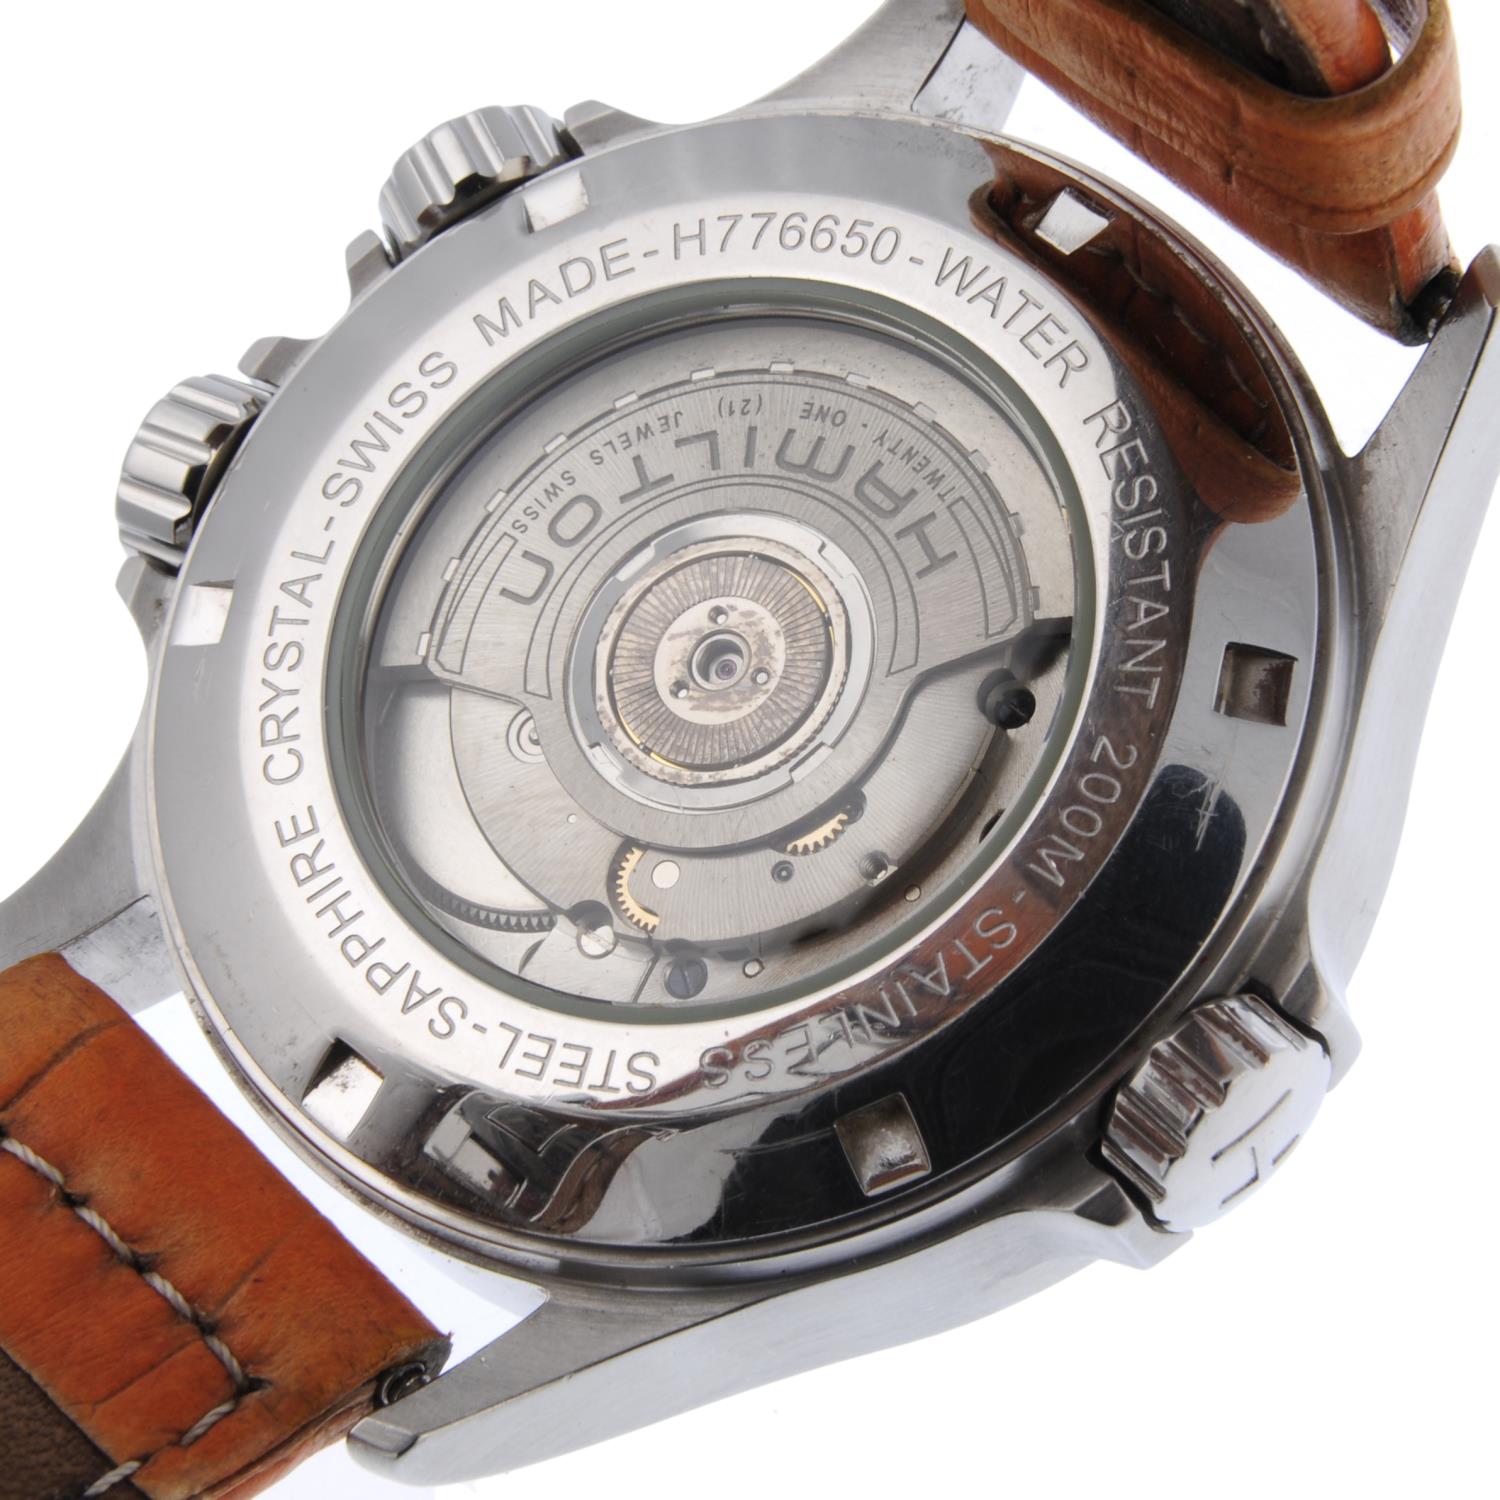 HAMILTON - a gentleman's Khaki Air Race wrist watch. - Image 5 of 5